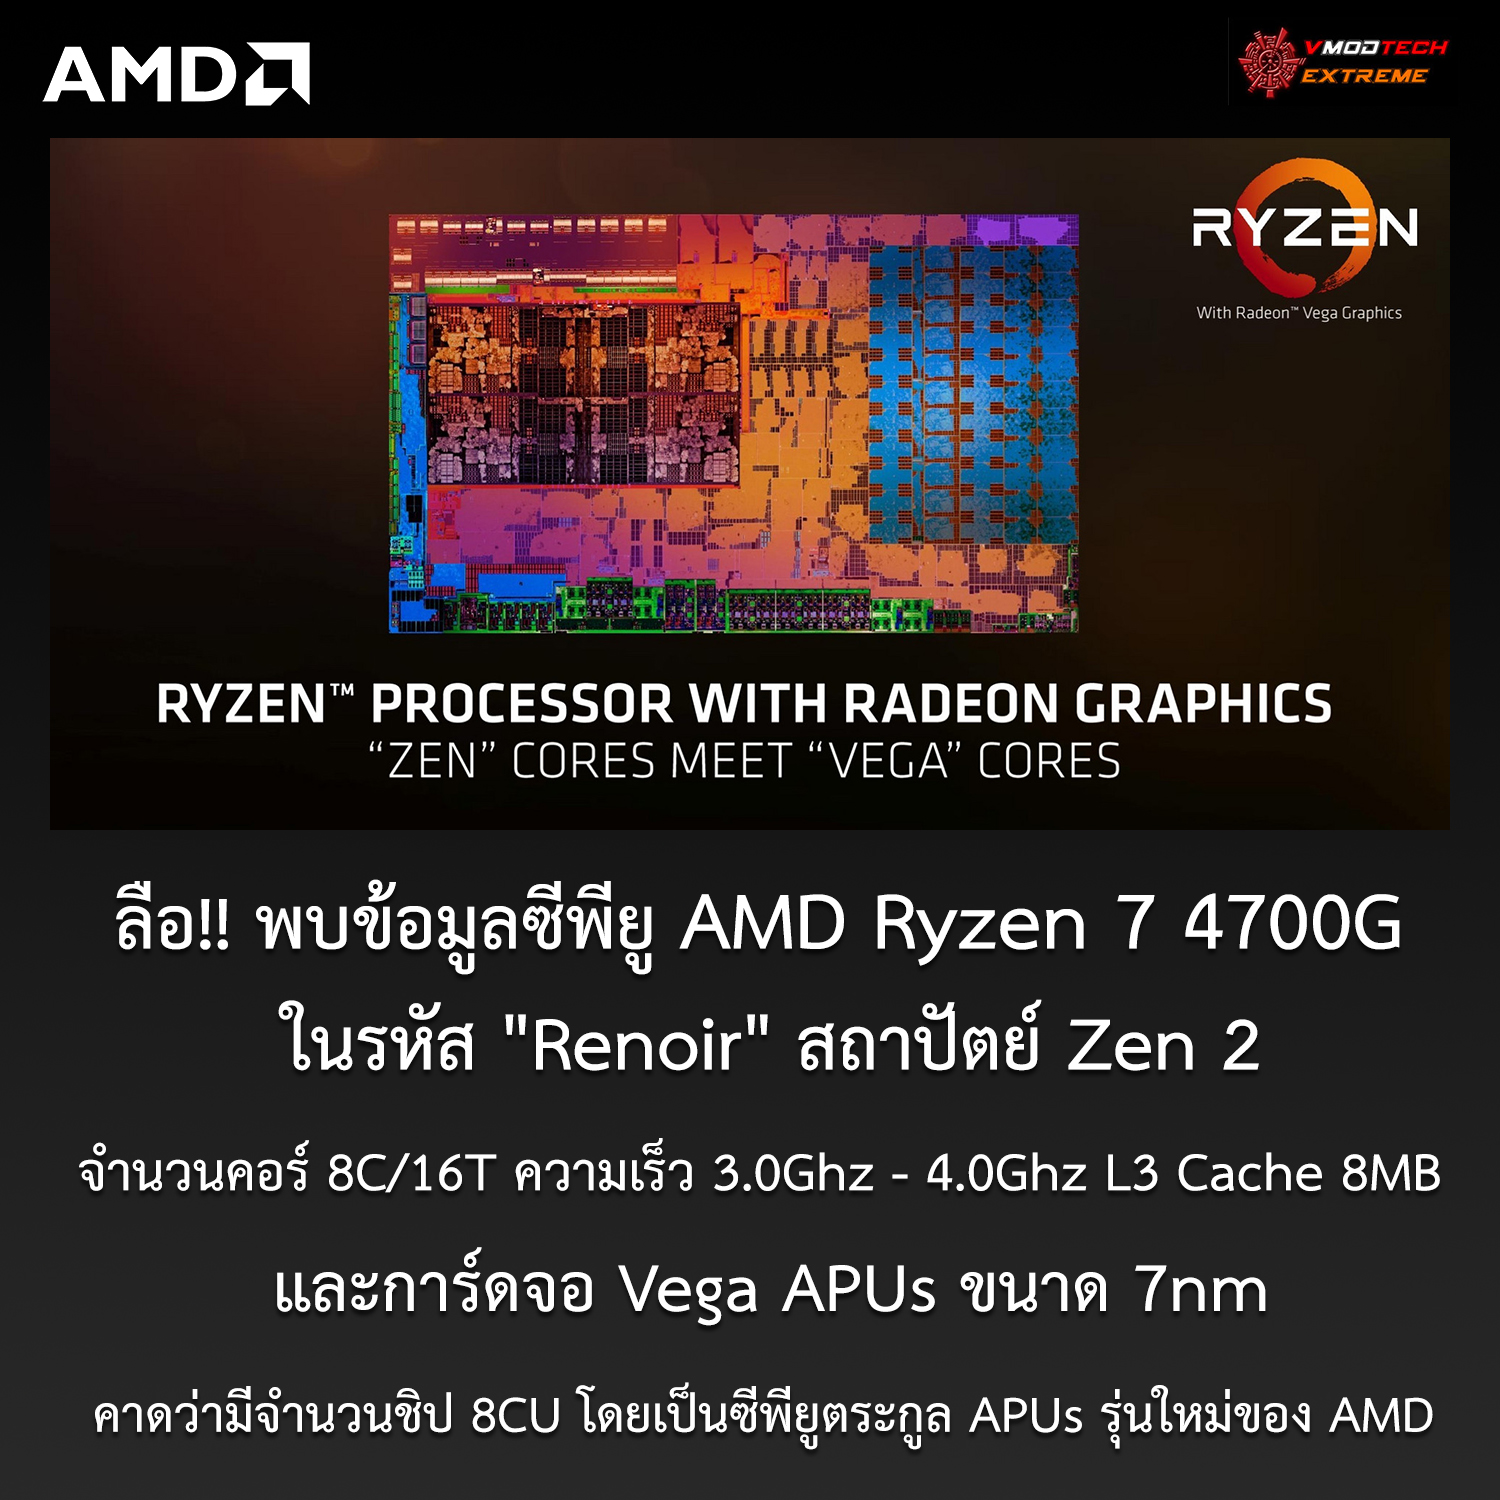 amd ryzen 7 4700g renoir พบข้อมูลซีพียู AMD Ryzen 7 4700G ในรหัส Renoir สถาปัตย์ Zen 2 และการ์ดจอ Vega APUs ขนาด 7nm 